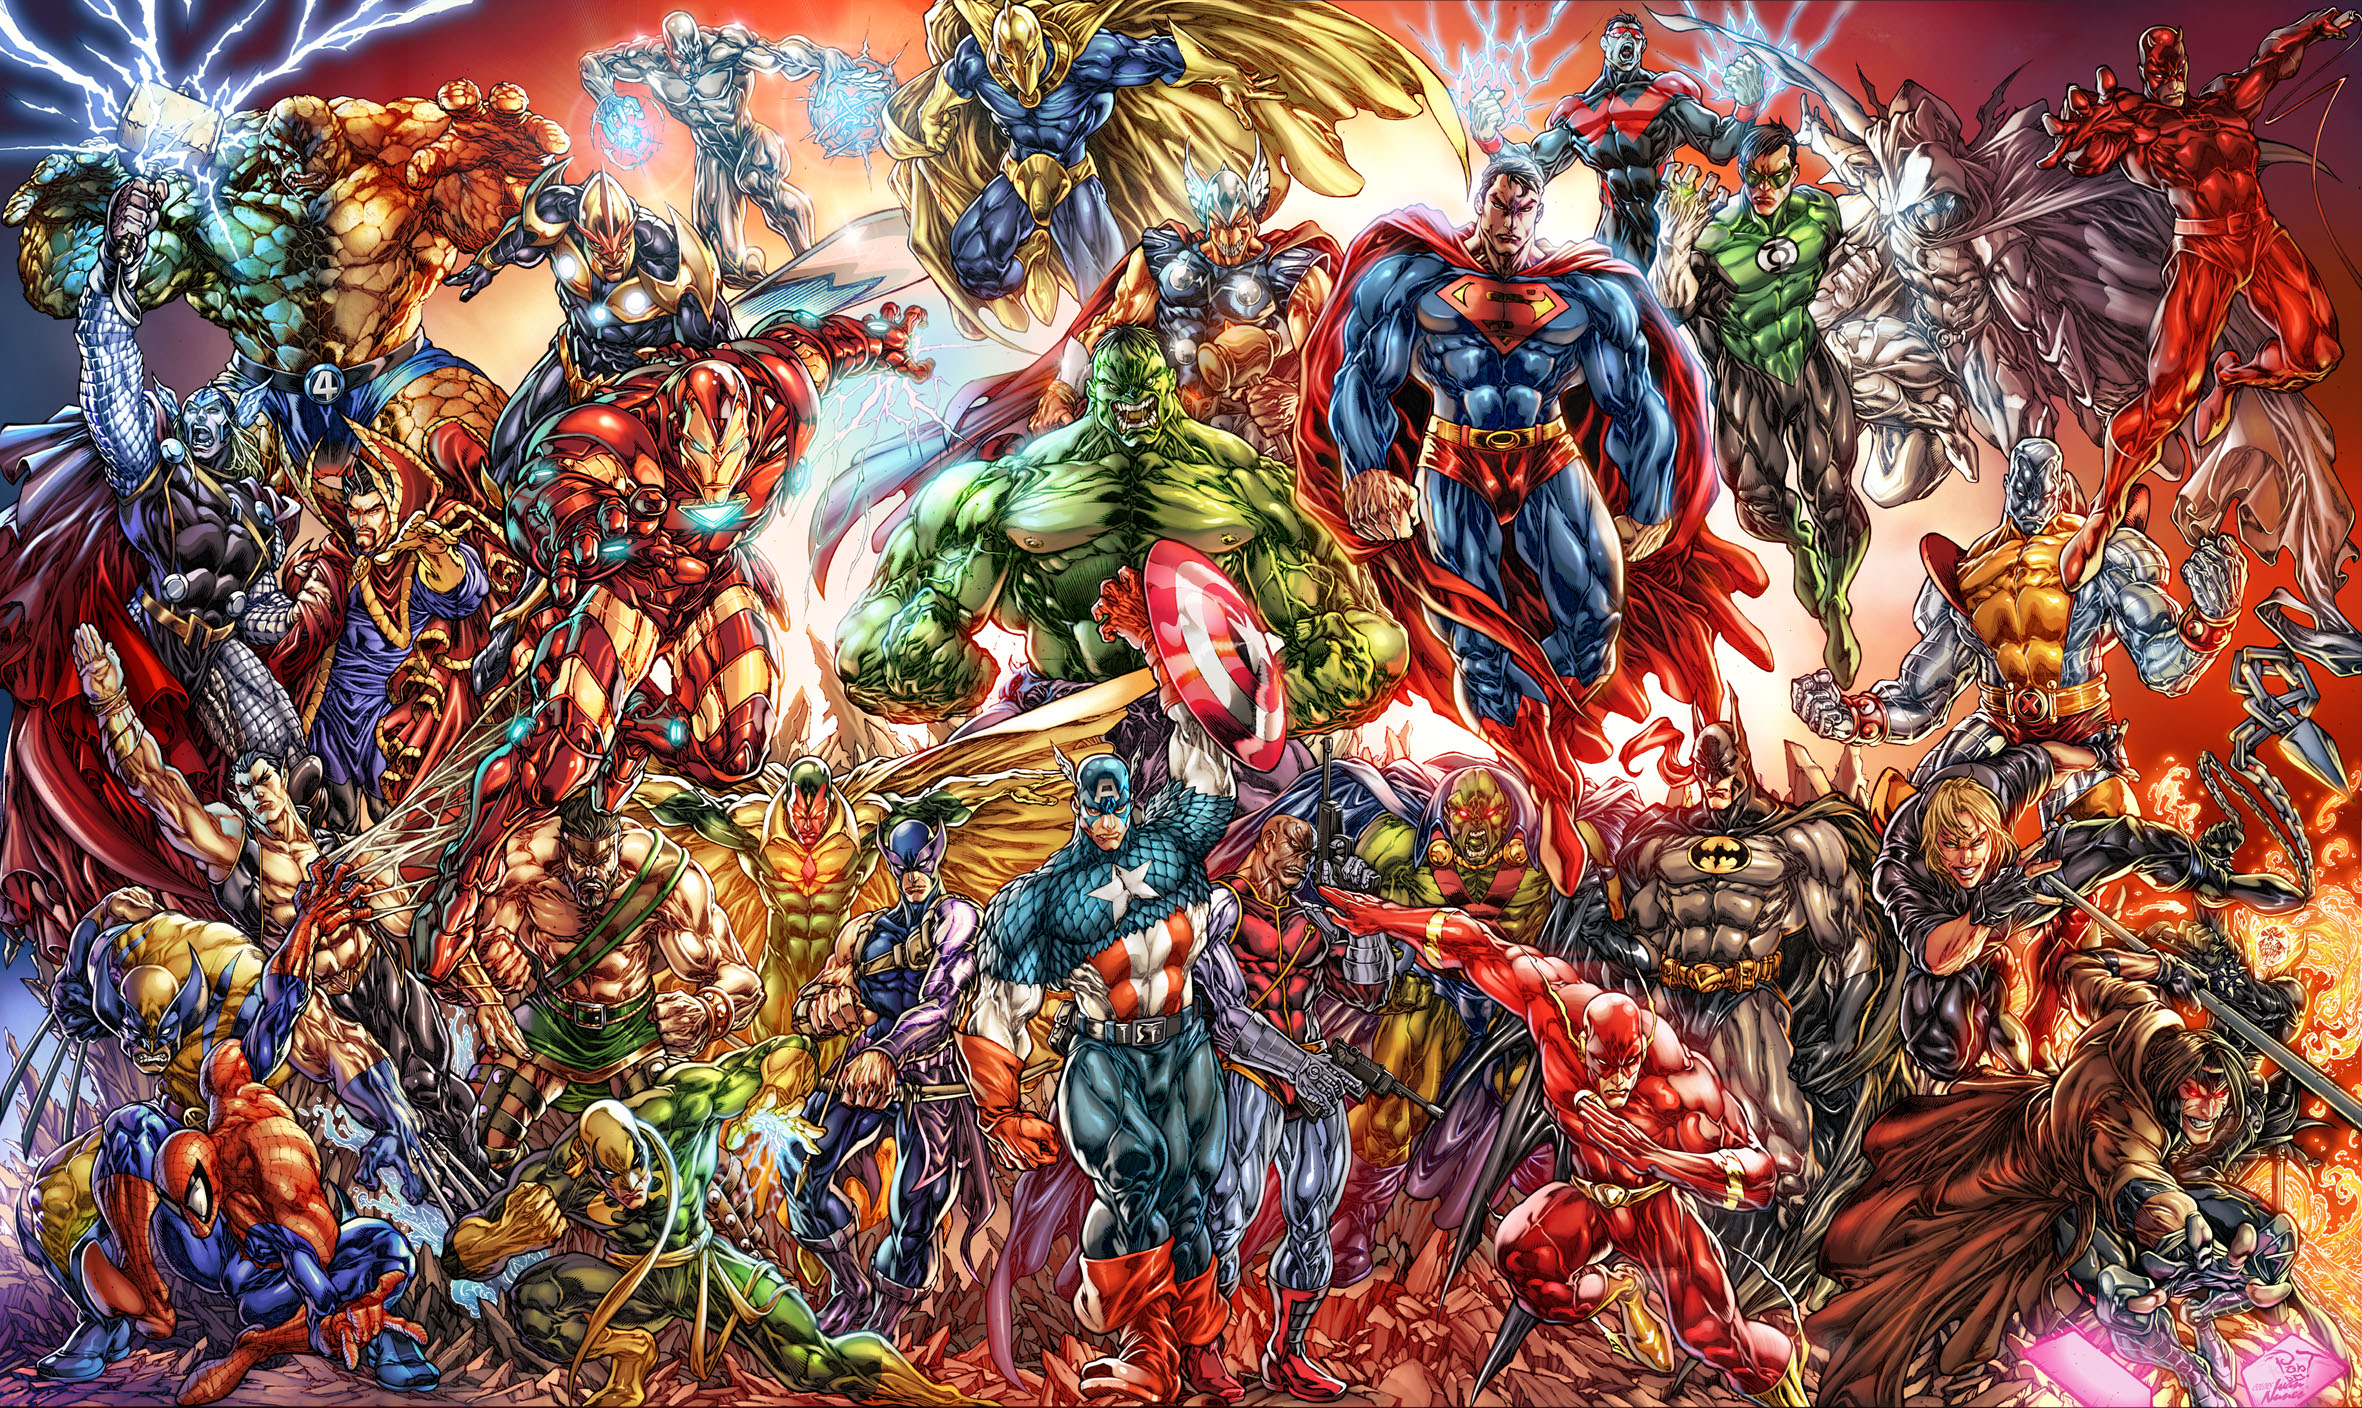 spider man, batman, comics, collage, barry allen, ben grimm, beta ray bill, captain america, clint barton, colossus, danny rand, daredevil, dc comics, deathlok, doctor fate (dc comics), doctor strange, flash, gambit (marvel comics), ghost rider, green lantern, hal jordan, hawkeye, hercules (marvel comics), hulk, iron fist (marvel comics), iron man, j'onn j'onzz, longshot (marvel comics), martian manhunter, moon knight, namor the sub mariner, nightwing, nova (marvel comics), peter parker, silver surfer, sub mariner, superman, thing (marvel comics), thor, vision (marvel comics), wolverine, wonder man